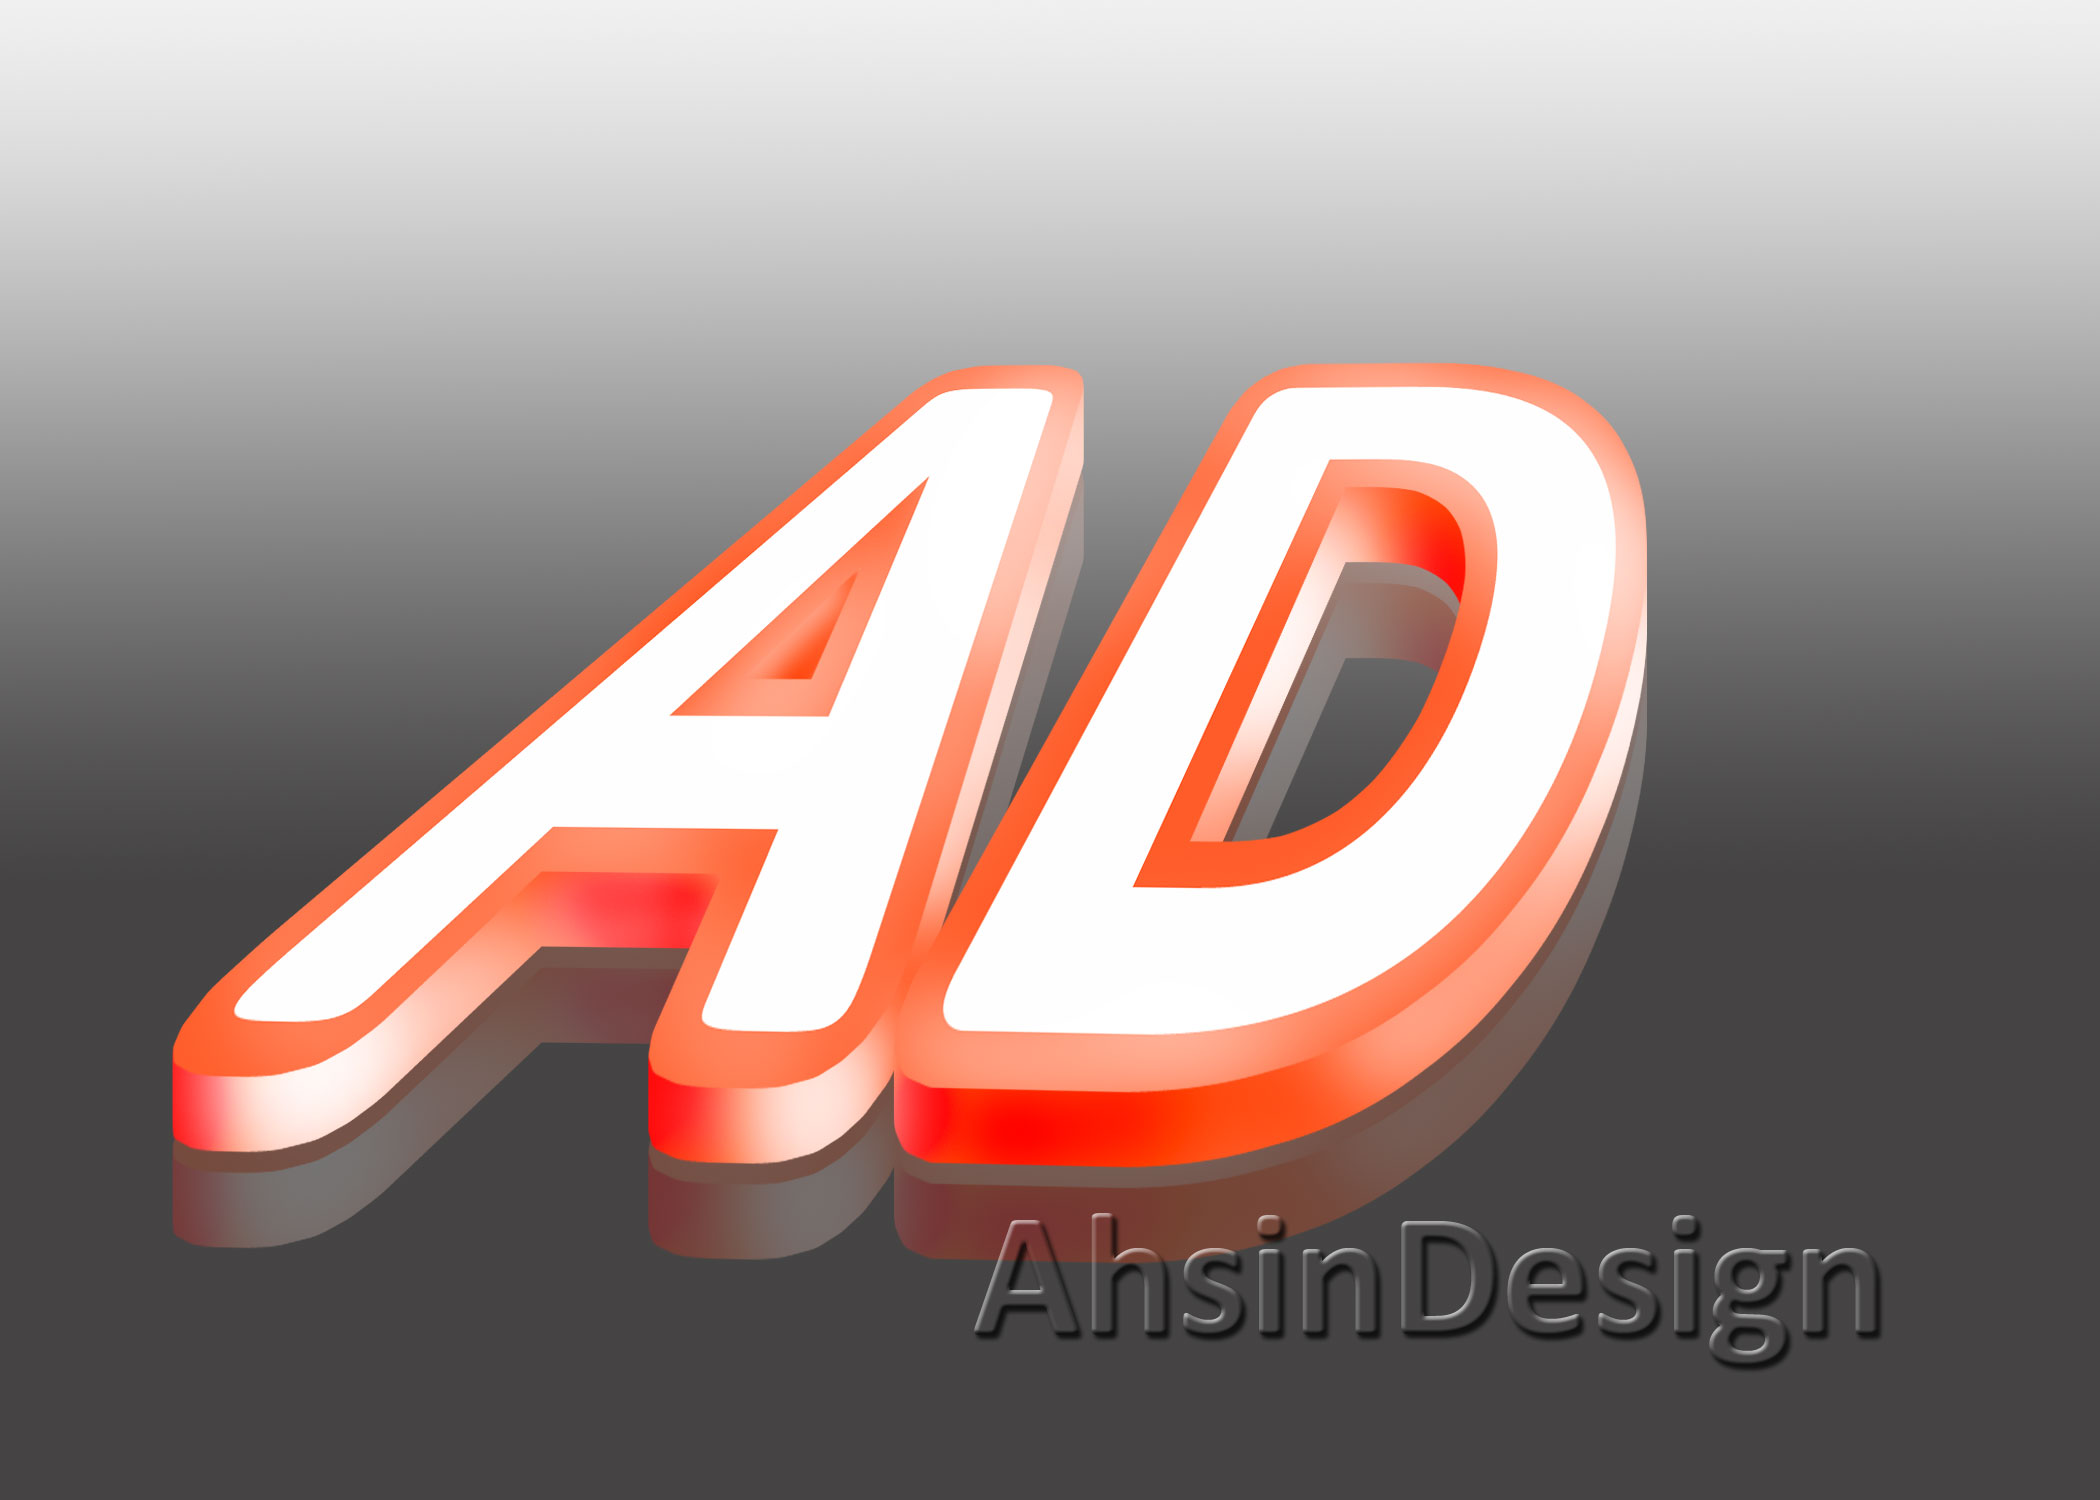 Membuat Teks 3D Dengan Photoshop Ahsindesign